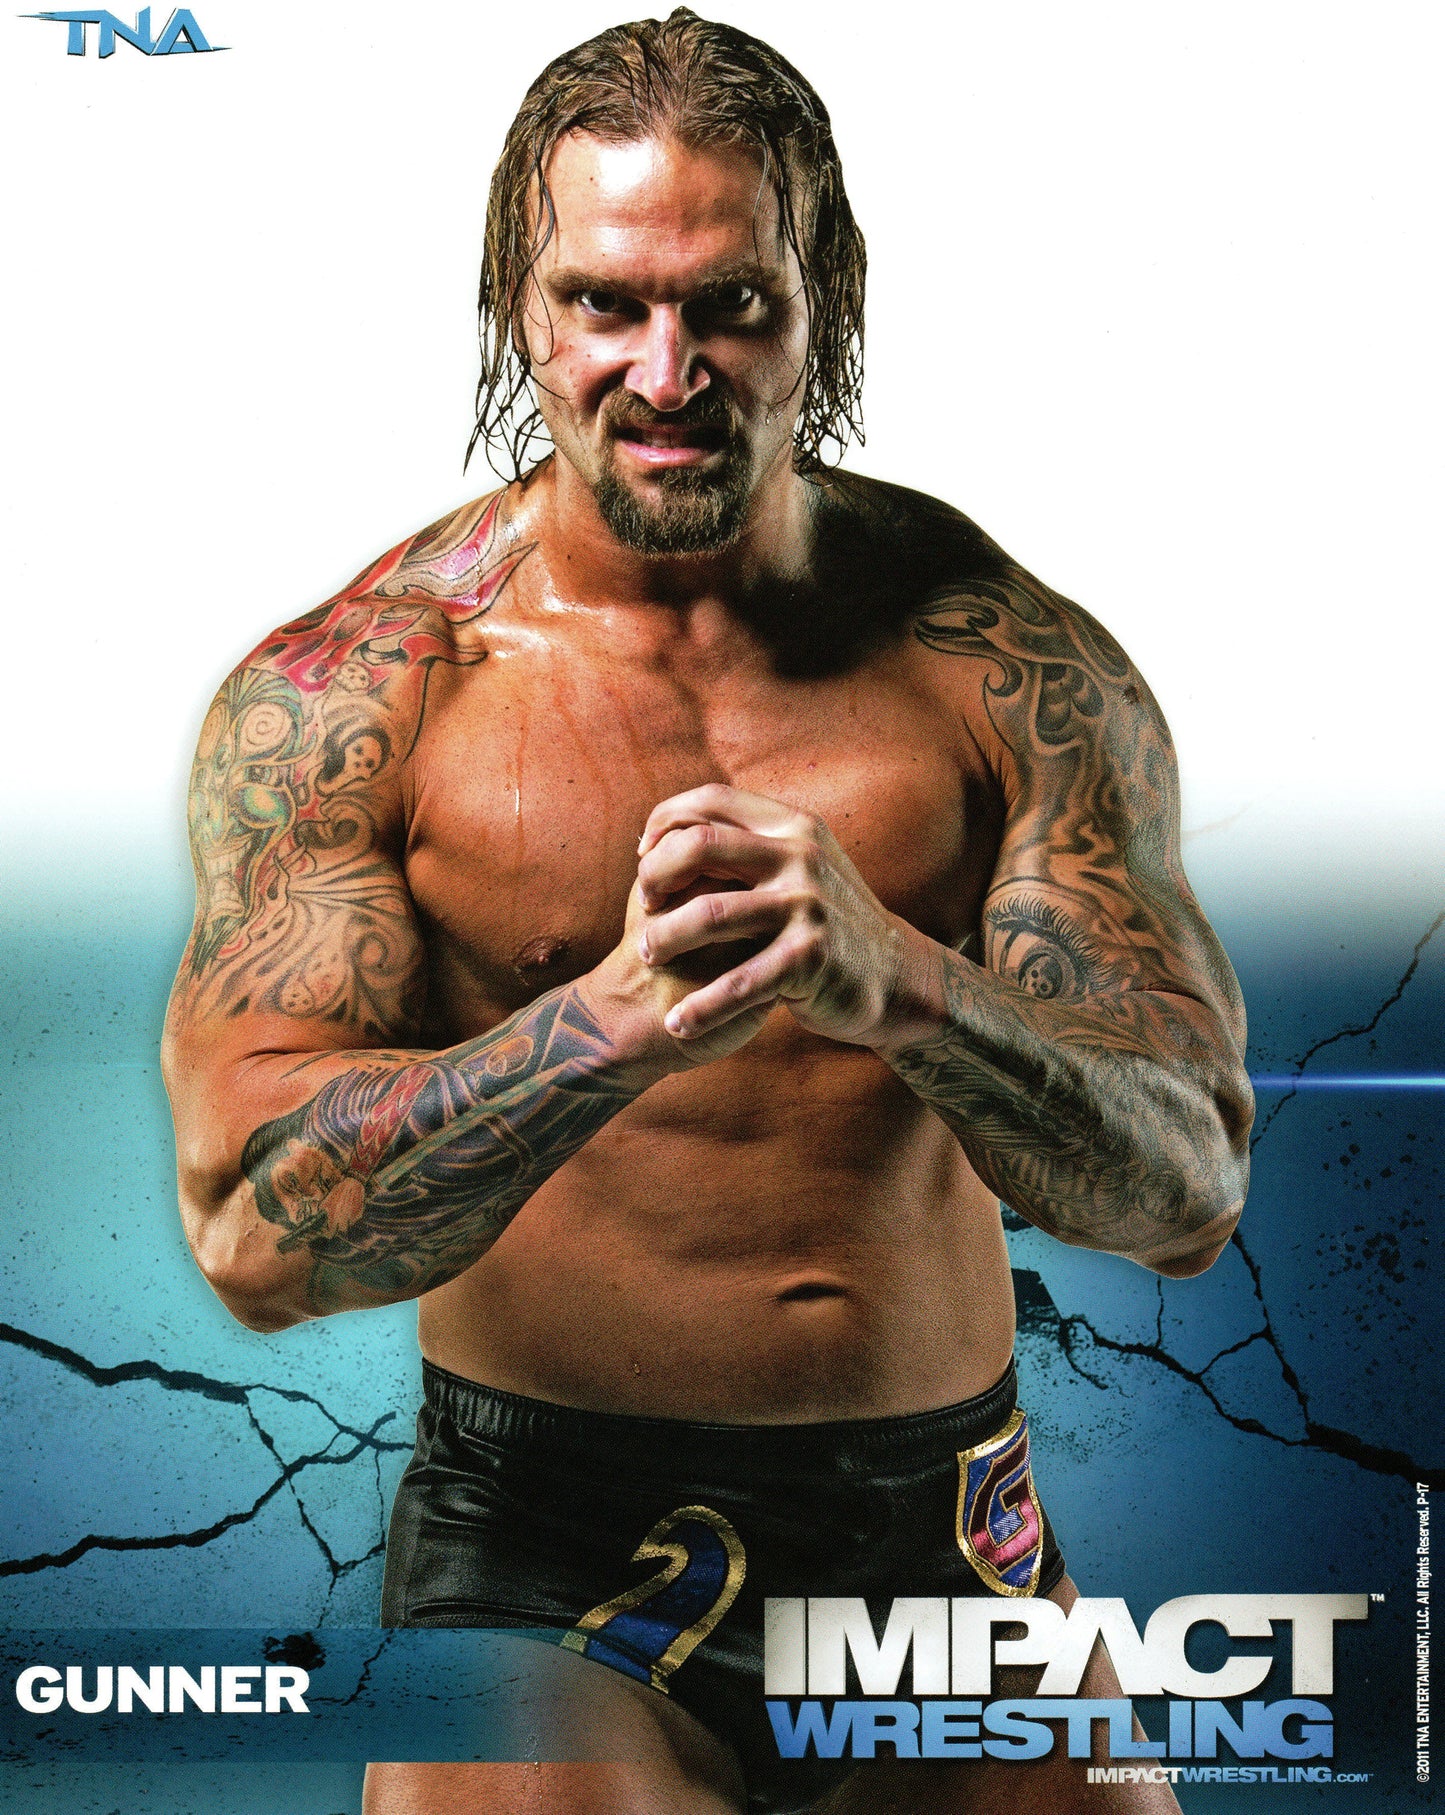 Gunner Impact Wrestling 8x10" Promo Photo P-17